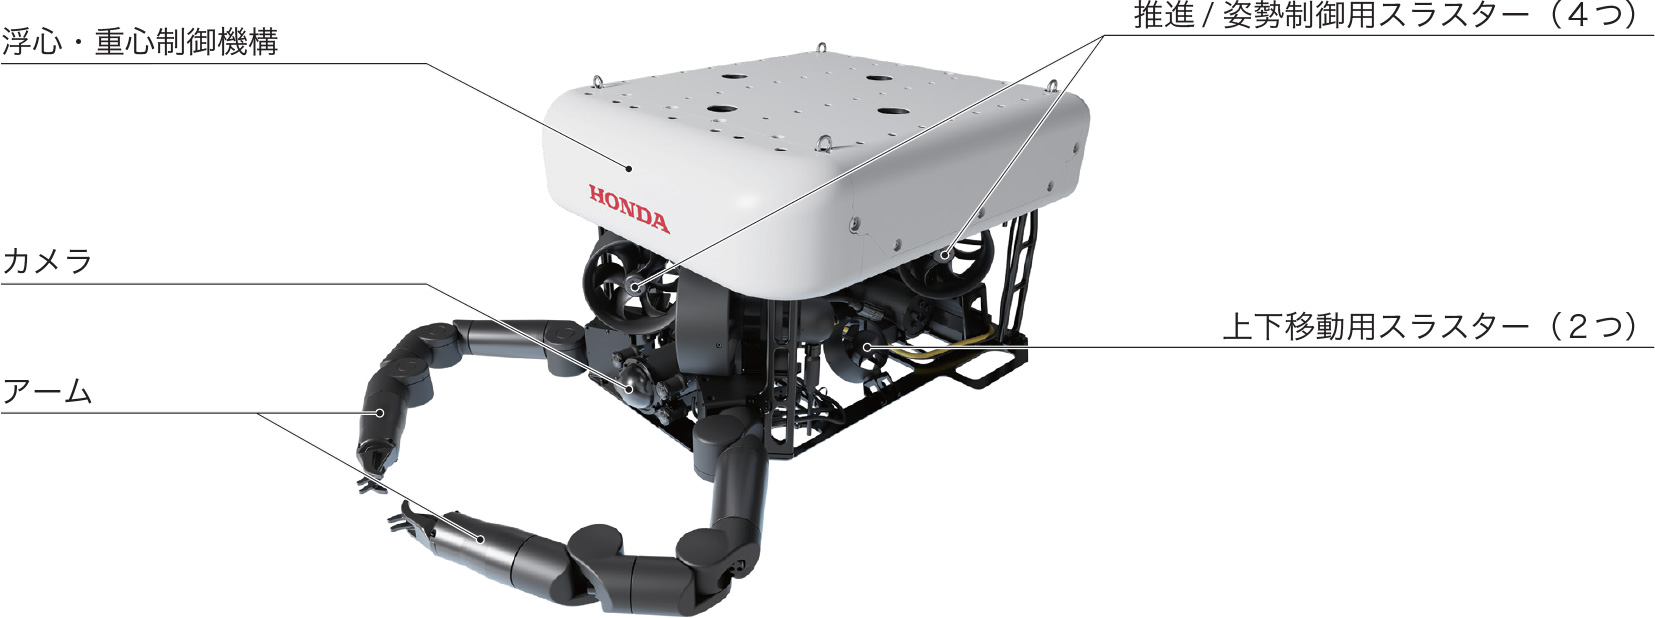 Honda ROV コンセプトモデルのシステム概要